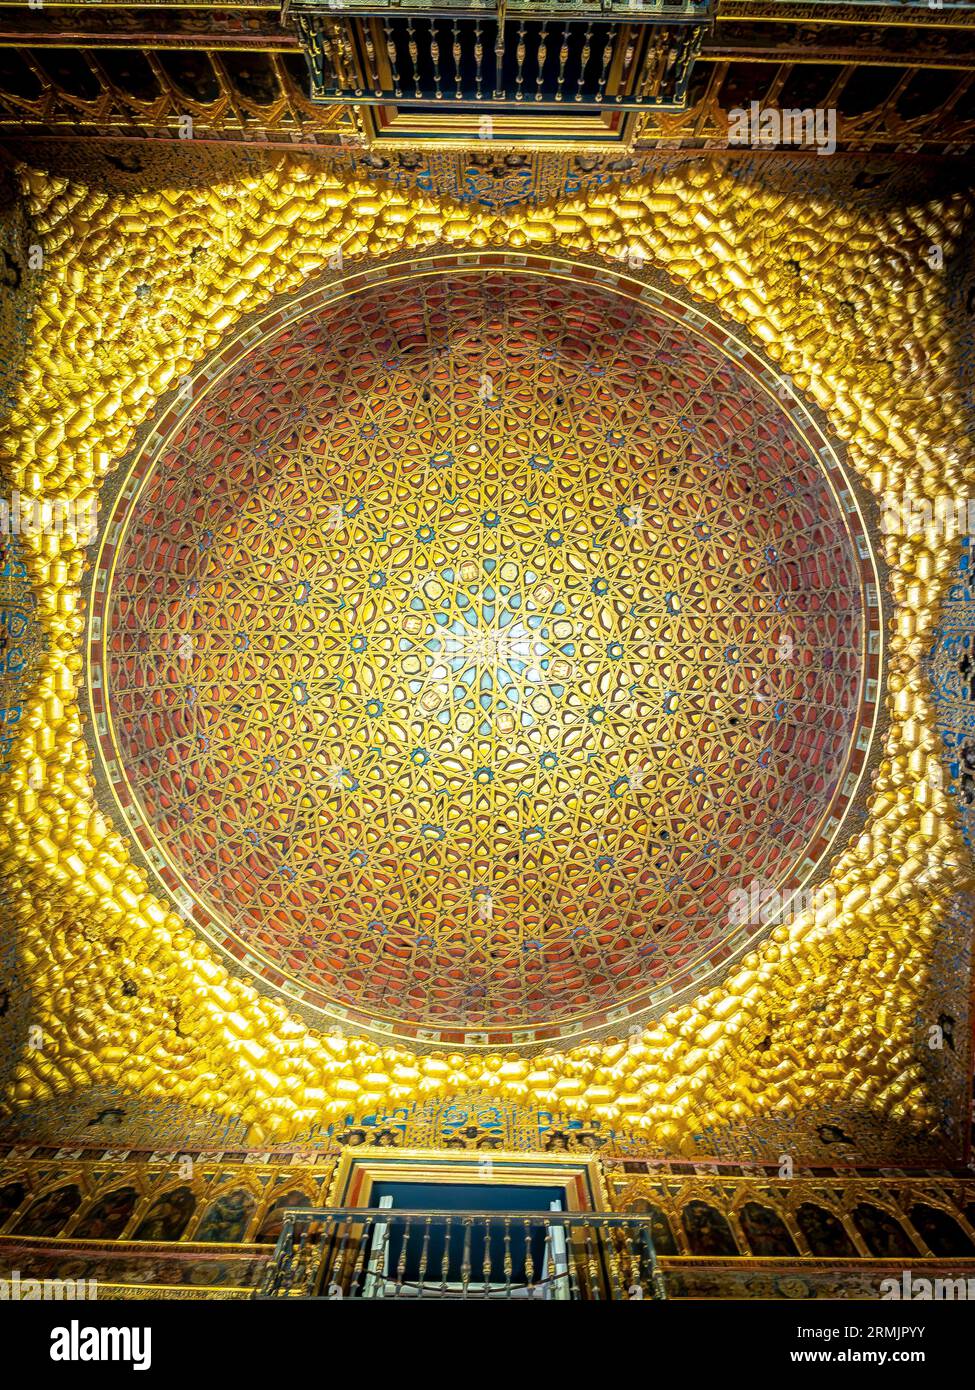 Dome of the Salon de Embajadores (Hall of Ambassadors), the main hall of  the Palacio Mudejar, Real Alcazar of Seville. Andalusia, Spain. Stock Photo